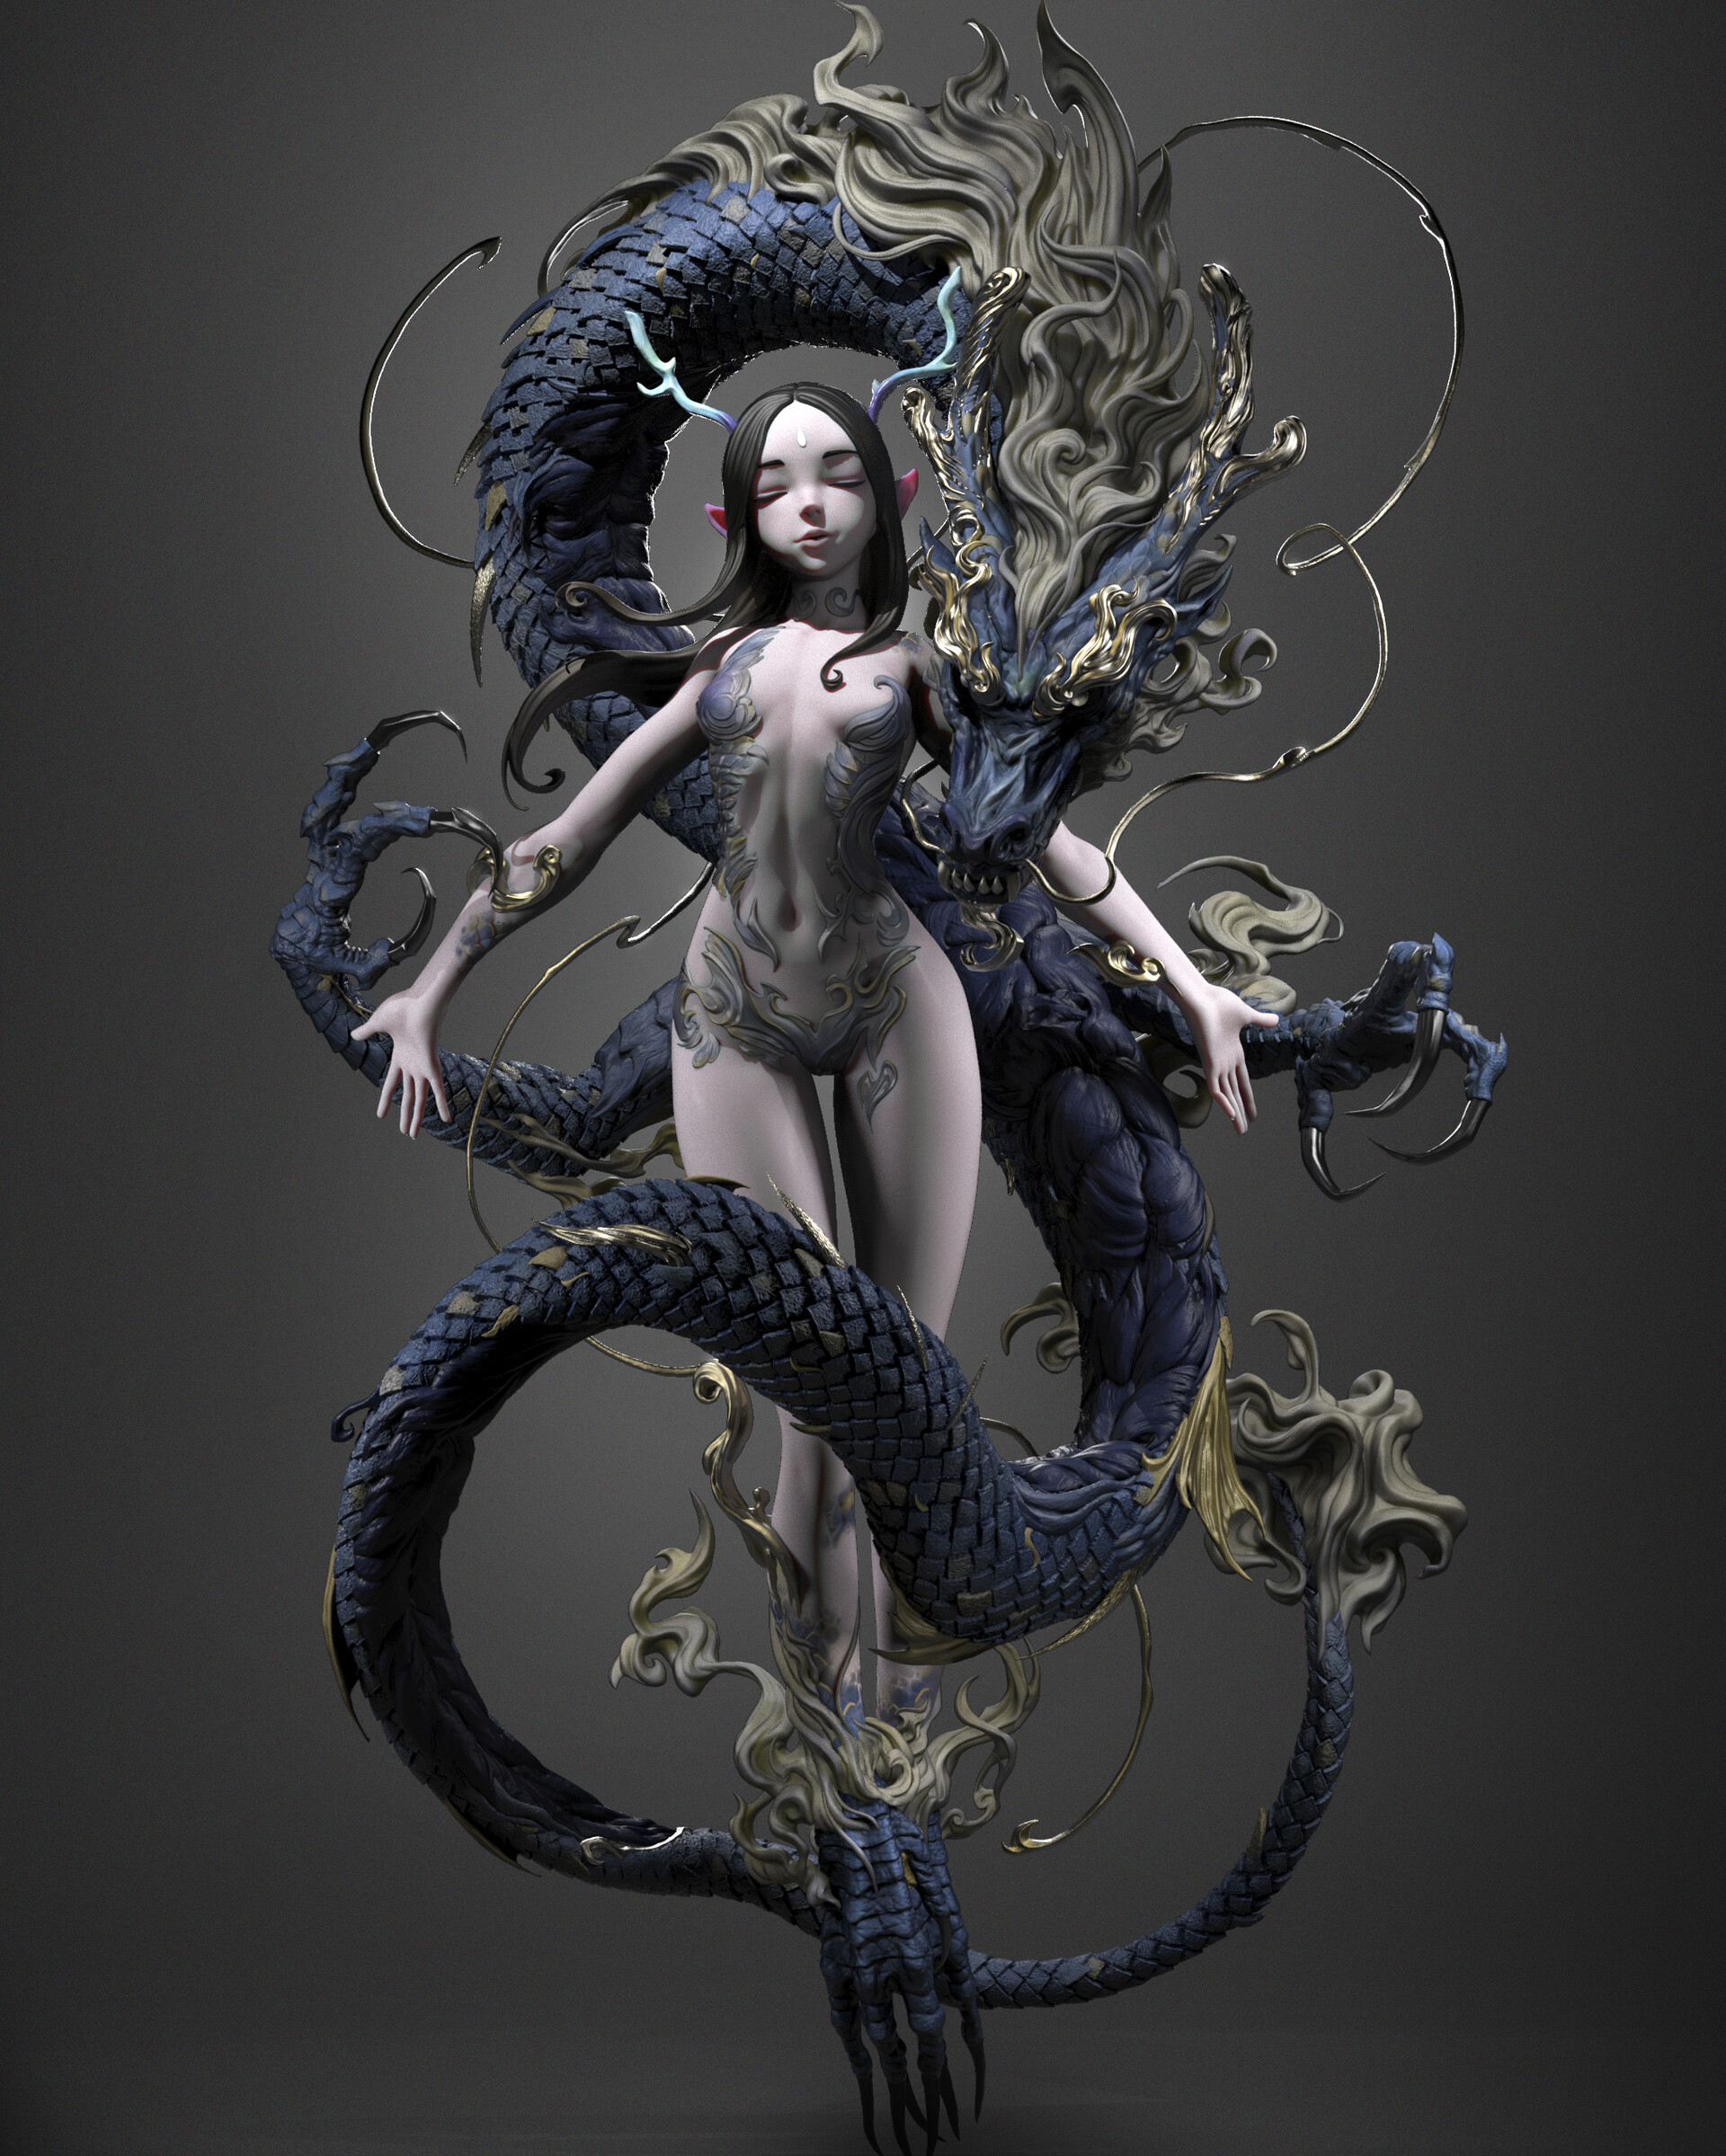 General 1920x2399 Daniel Moudatsos artwork women fantasy art closed eyes dragon creature gray background